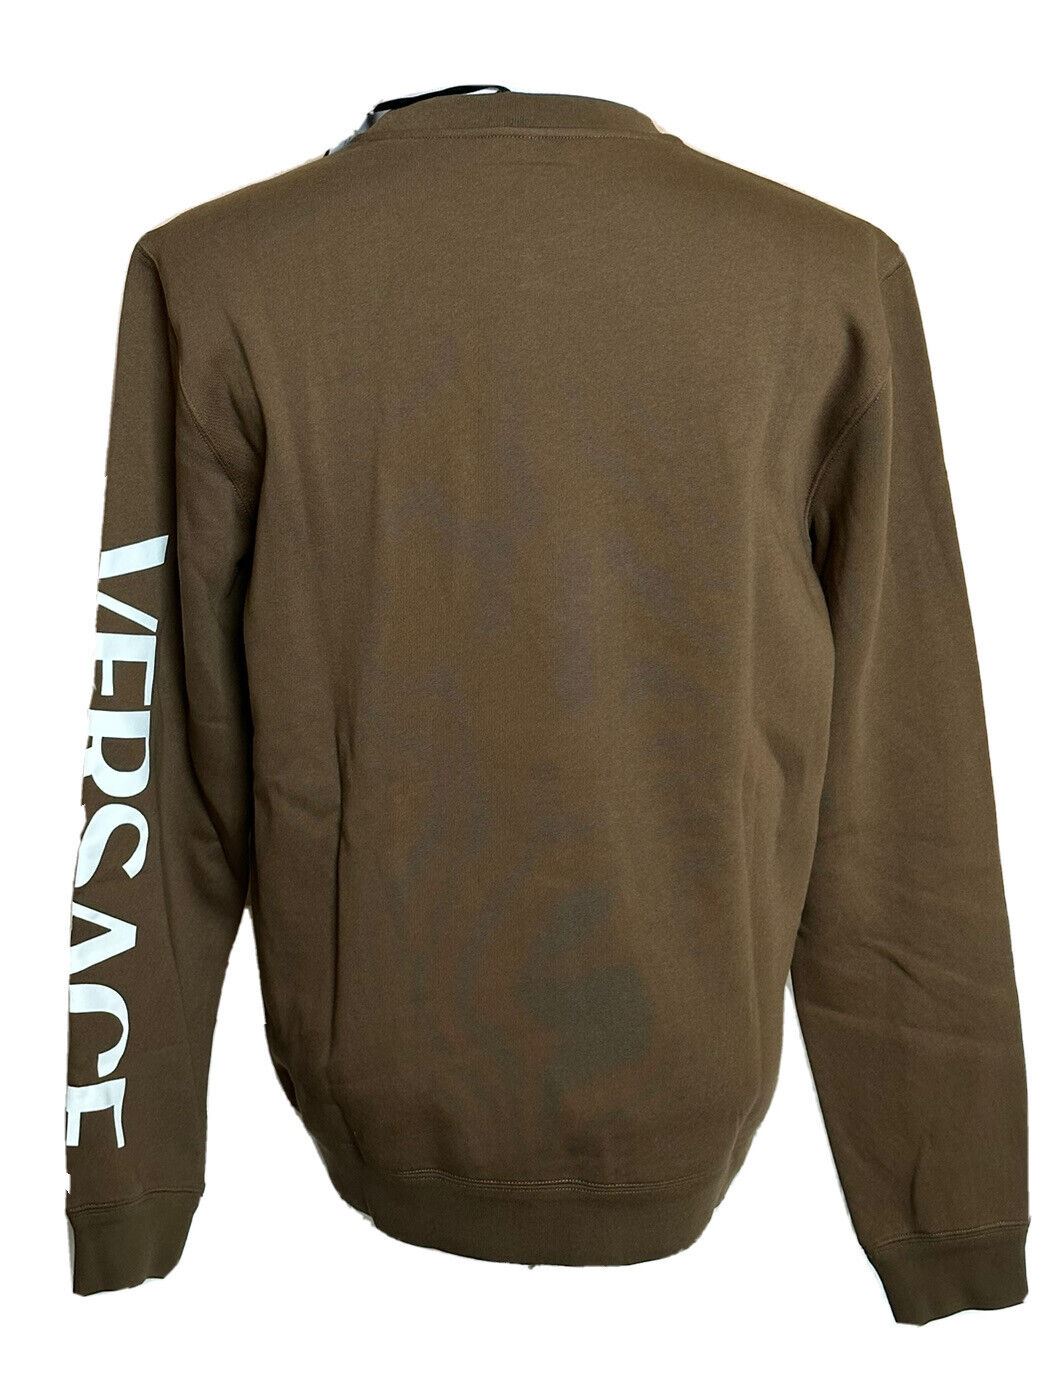 NWT $850 Versace Medusa Renaissance Khaki Cotton Sweatshirt XS 1008282